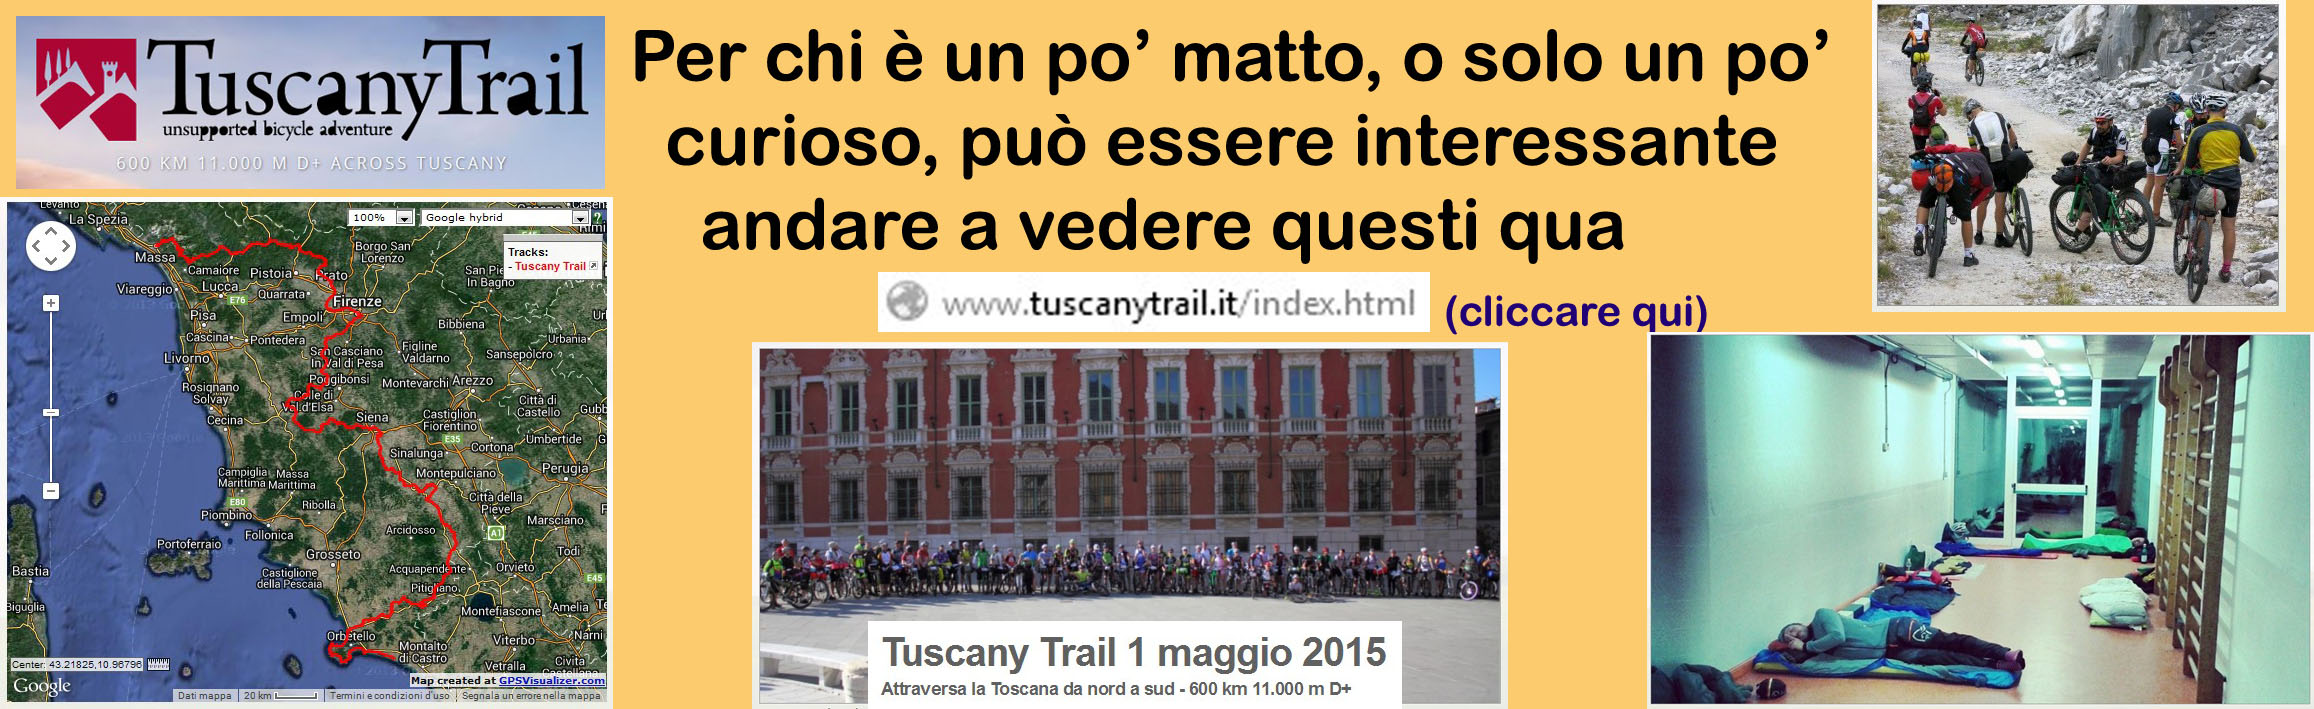 Banner del link al Tuscany Trail